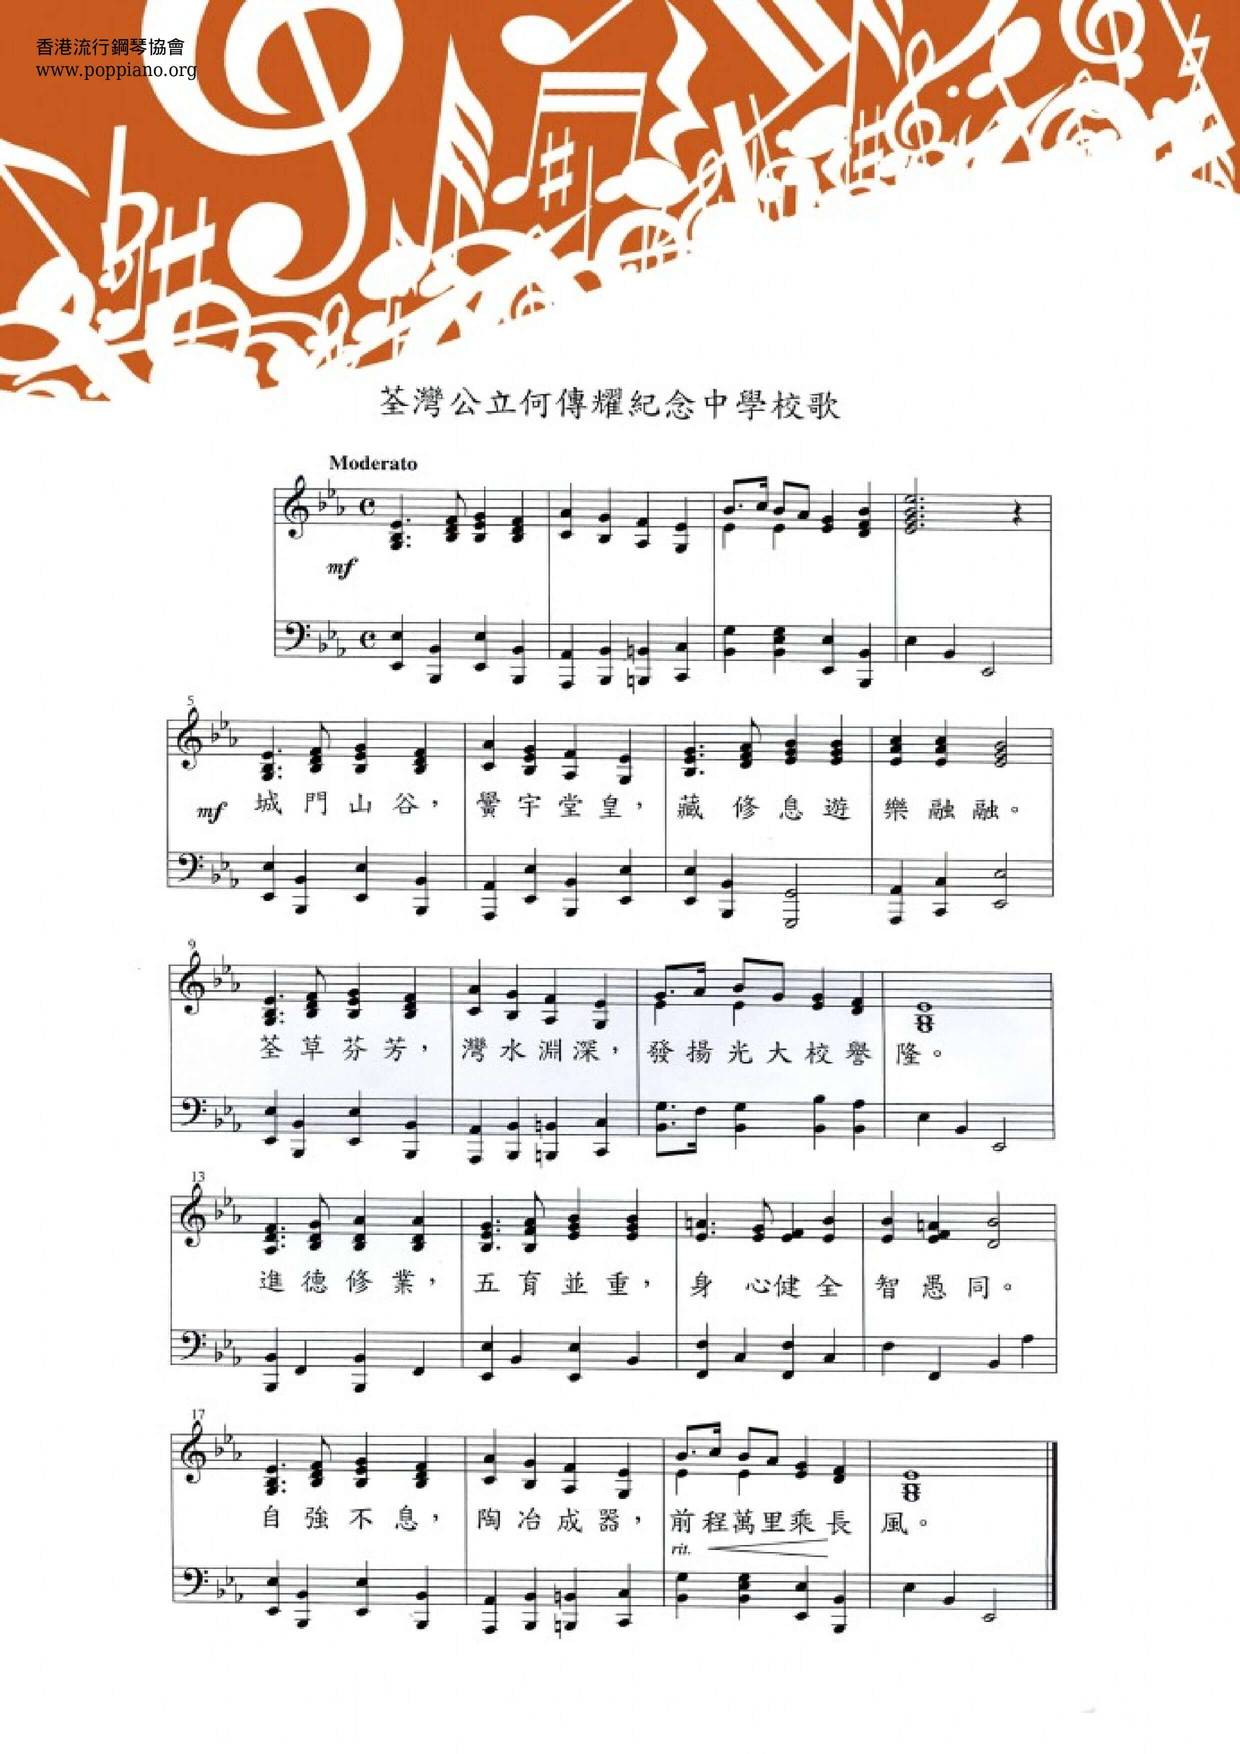 荃灣公立何傳耀中學小學校歌ピアノ譜